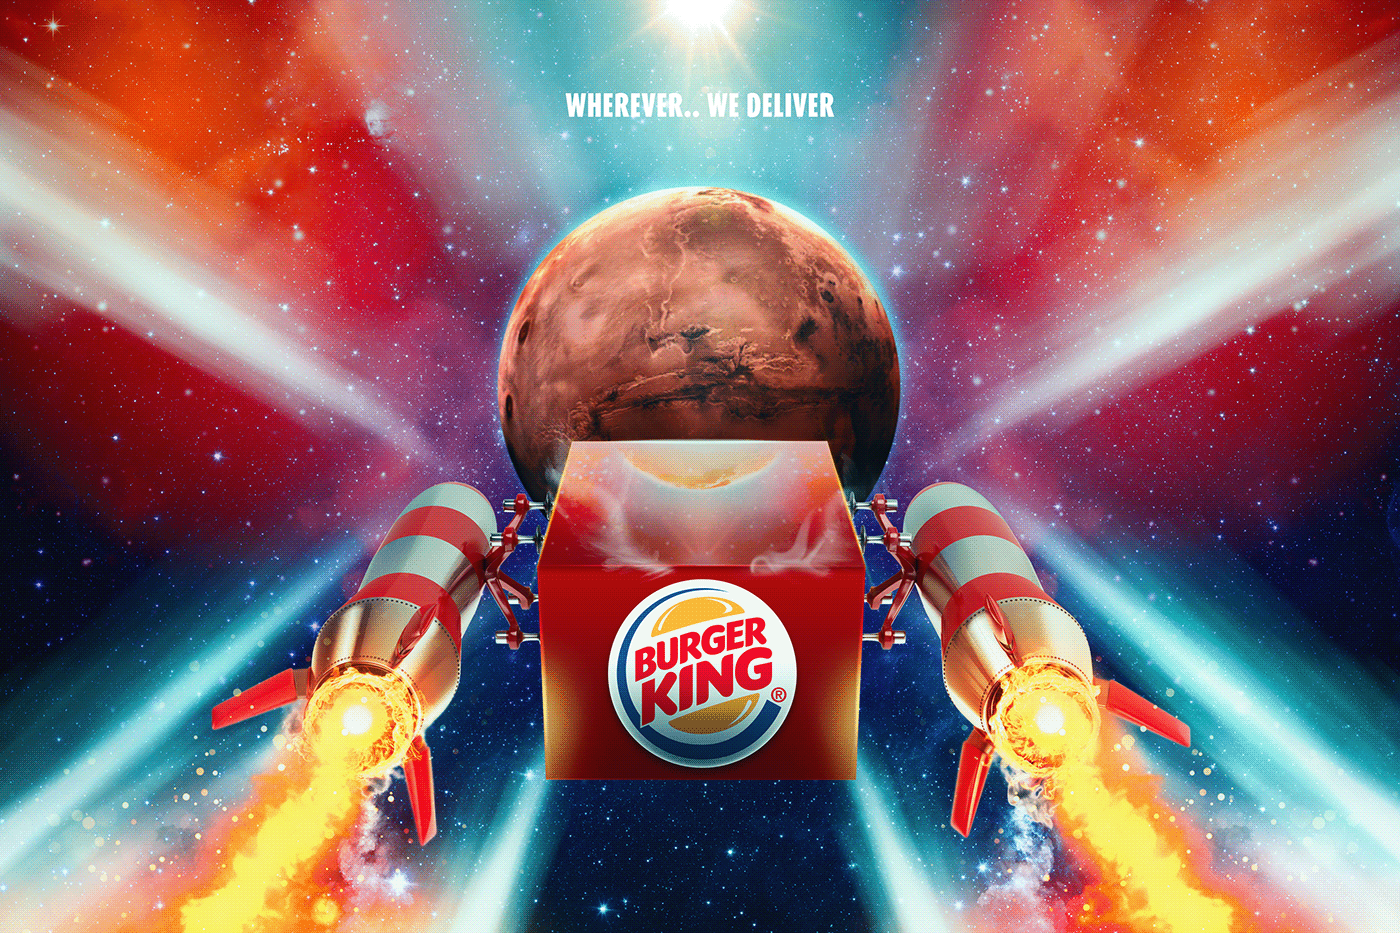 creative Burger King mcdonald's Advertising  Space  burger colors social media trends Qatar